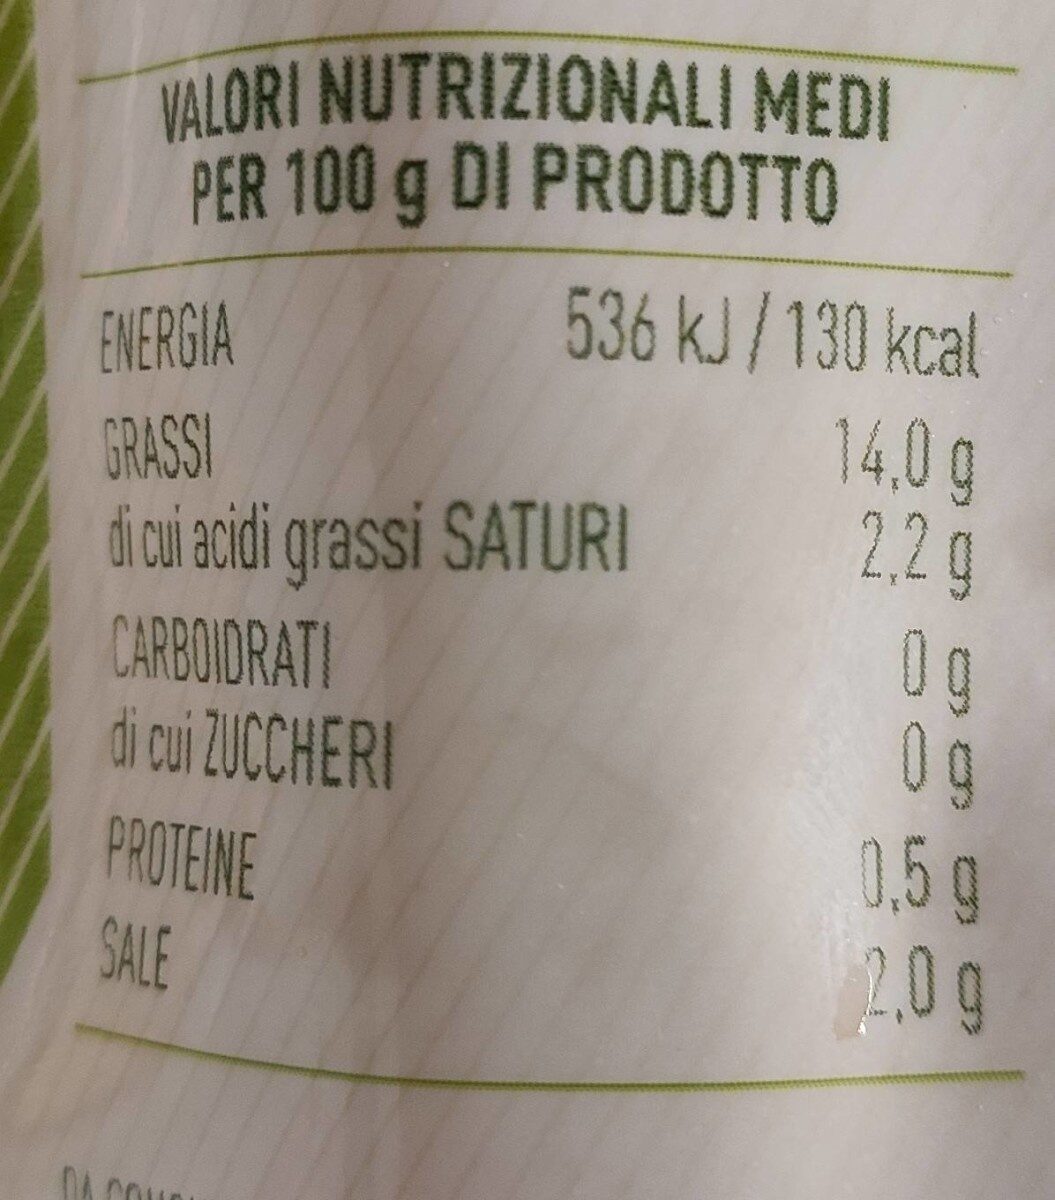 Olive nere denocciolate OlivOlì - Nutrition facts - fr